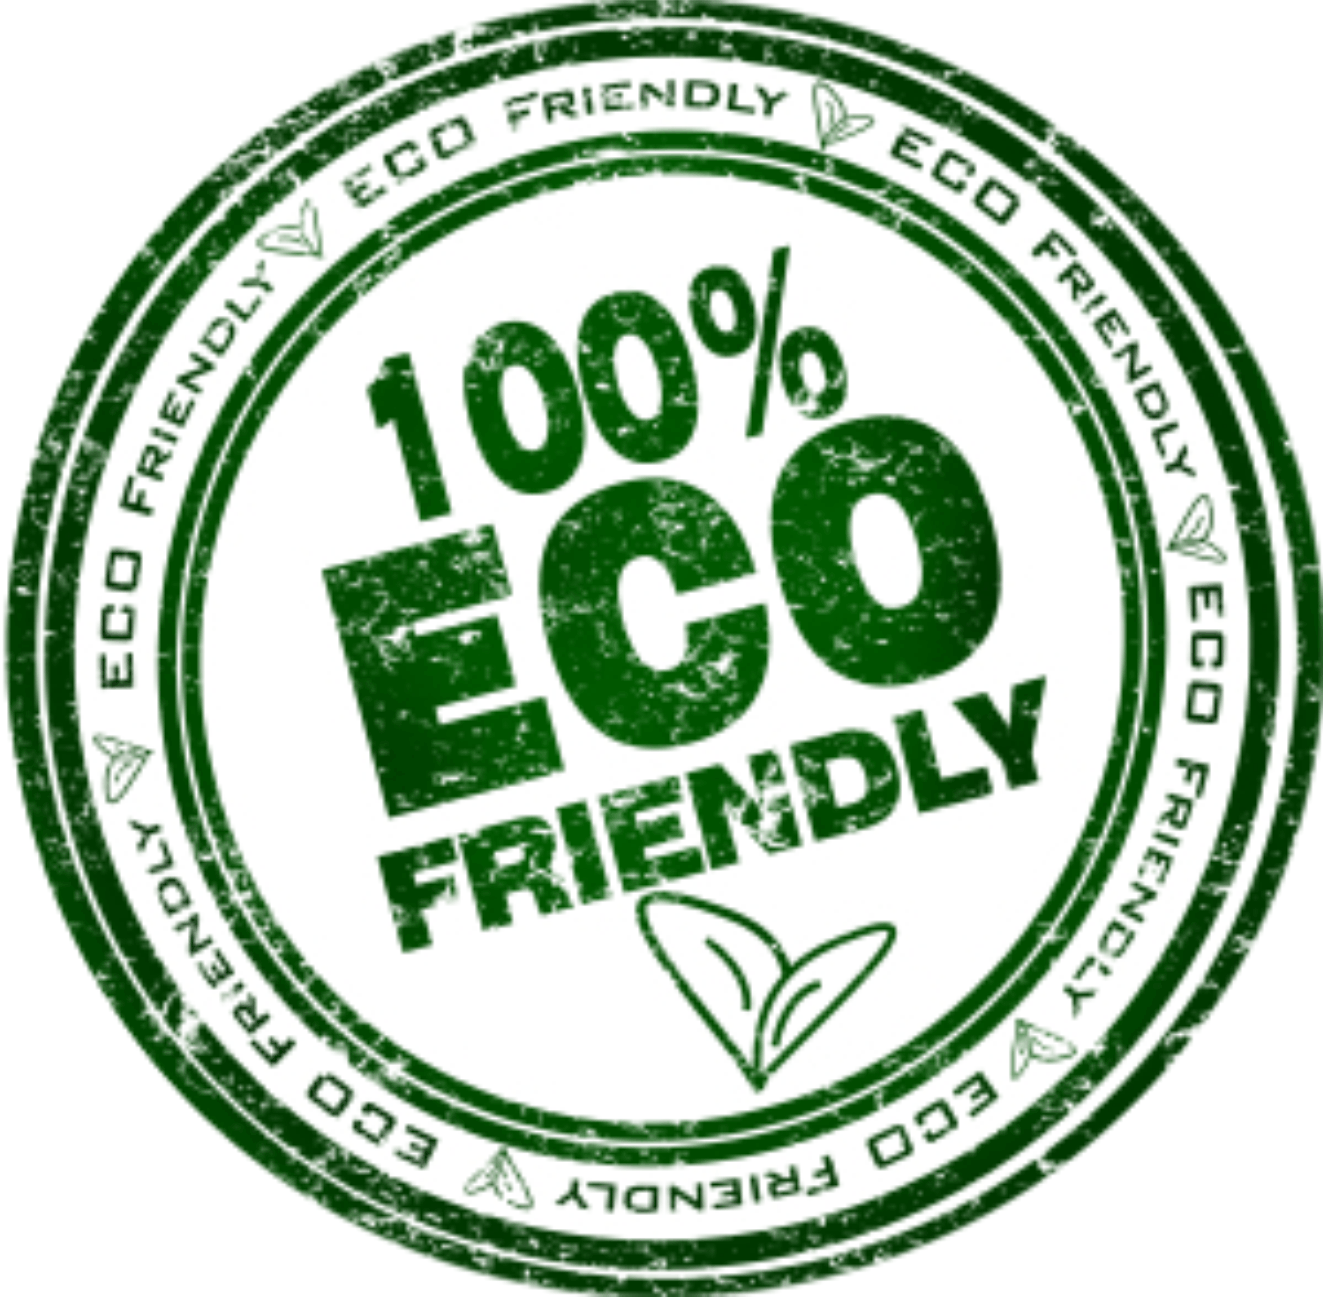 Eco Friendly Stamp